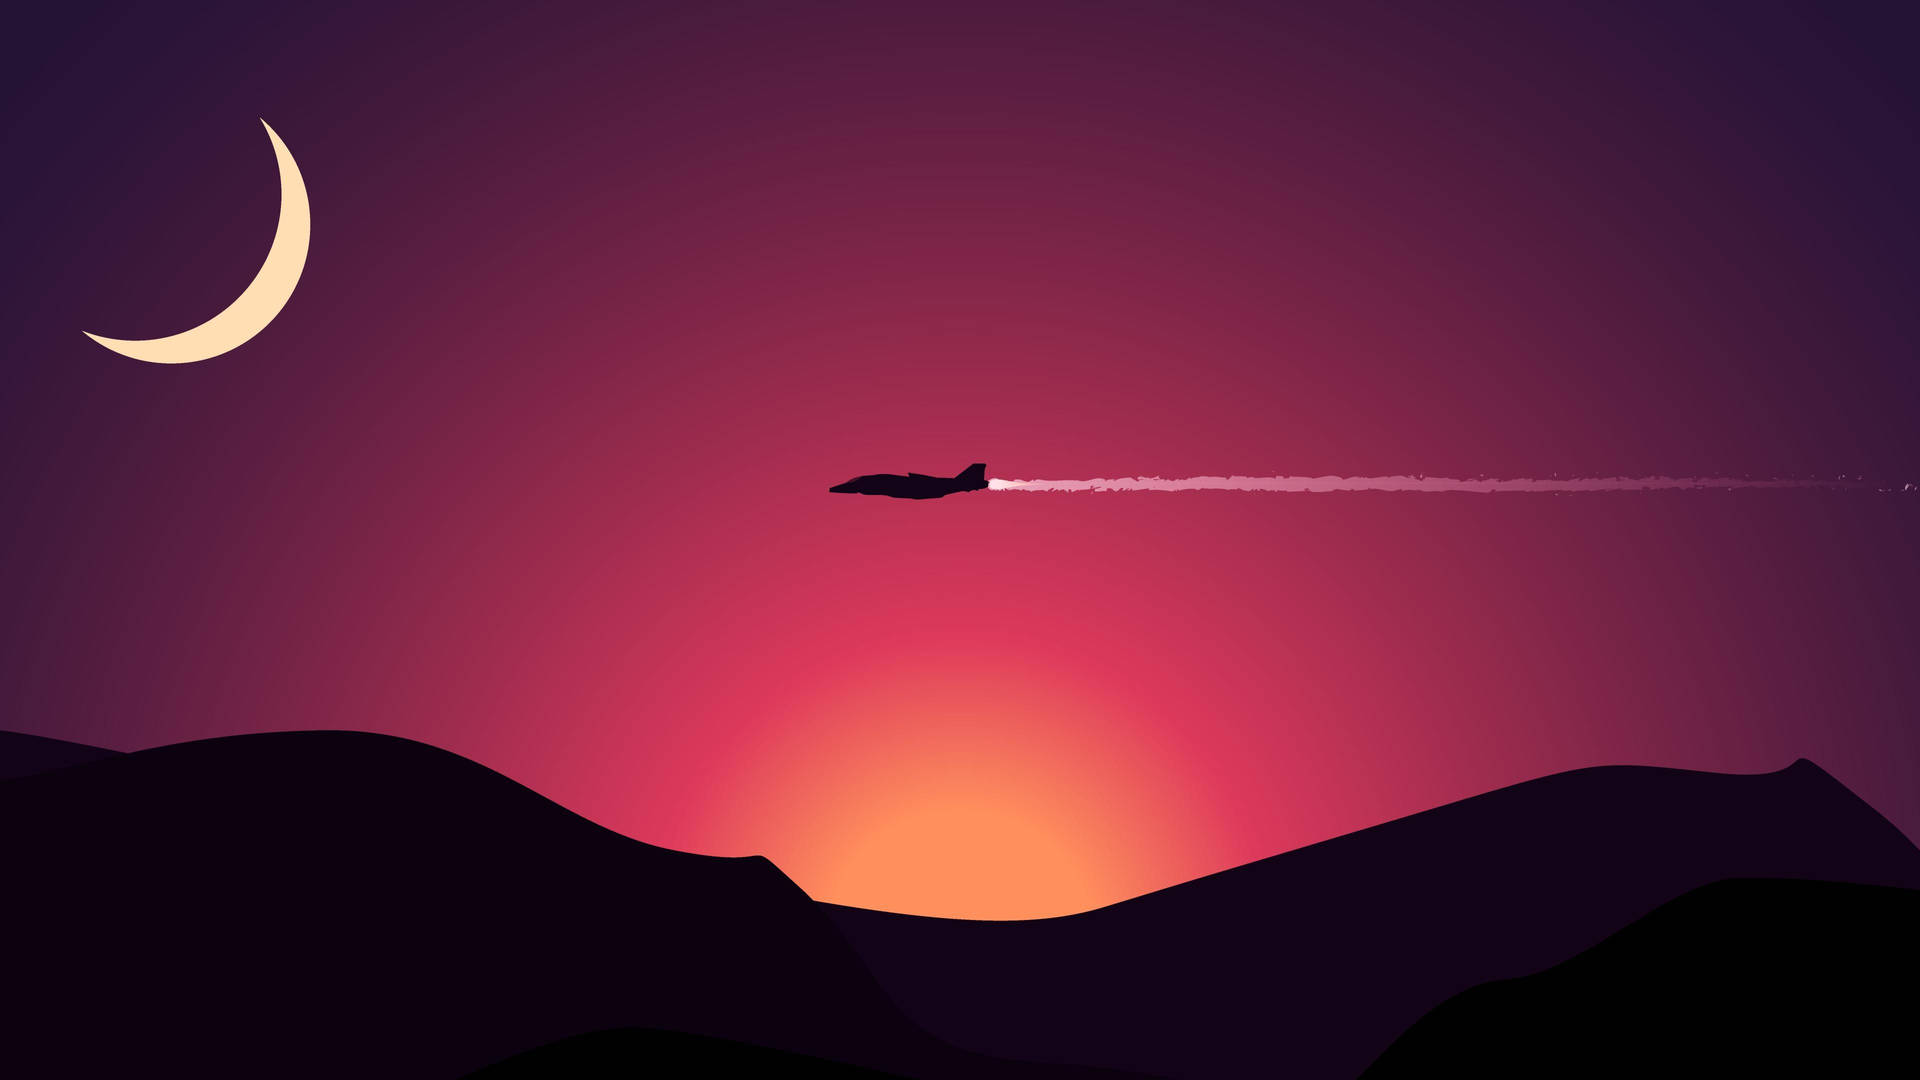 Jet Flying In The Fuchsia Sky 4k Flat Art Wallpaper